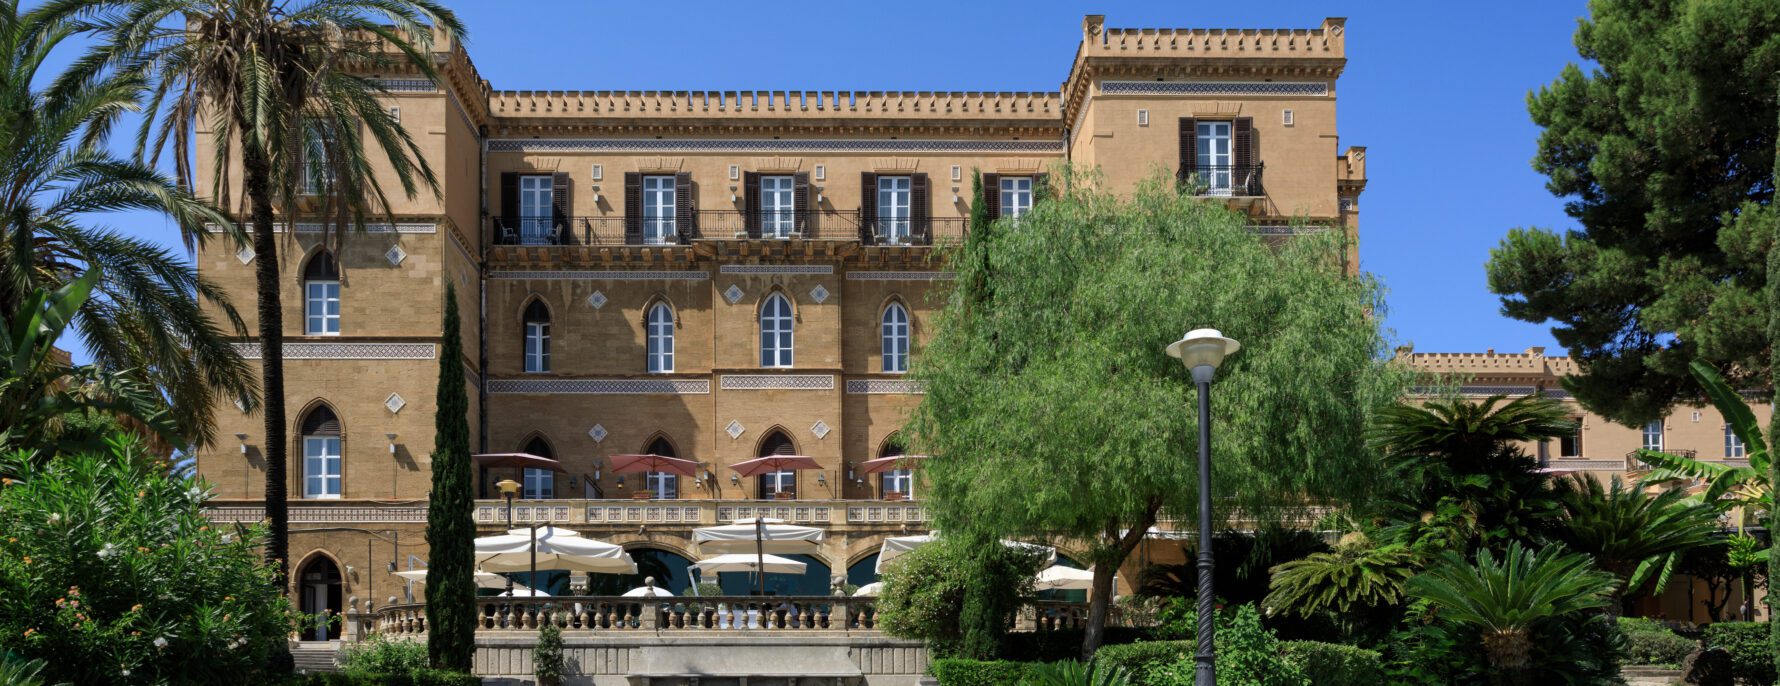 est Italy: Luxury Hotel Palazzo in Palermo